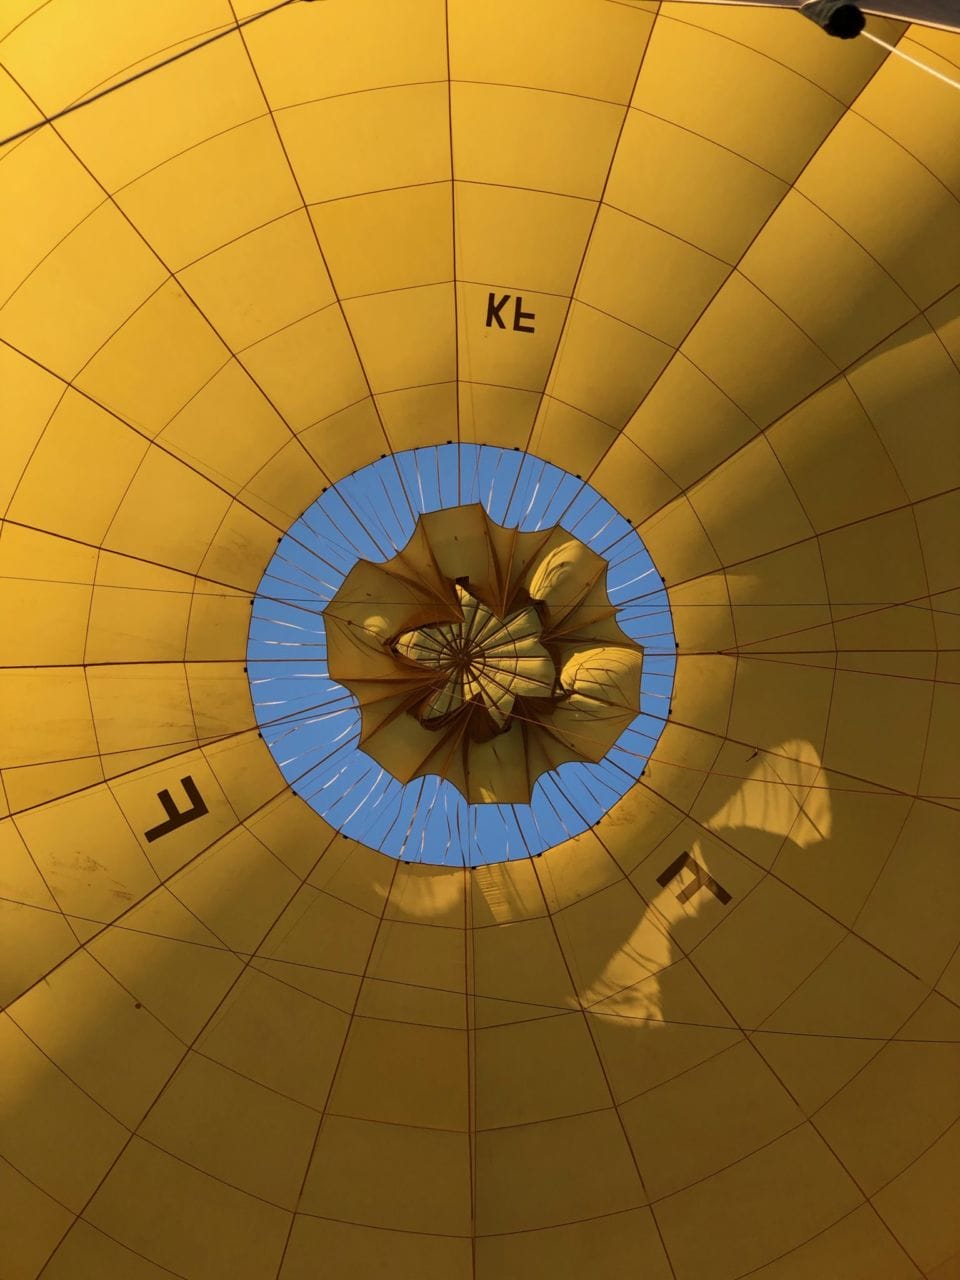 Gelber Ballon mit geöffnetem Segel